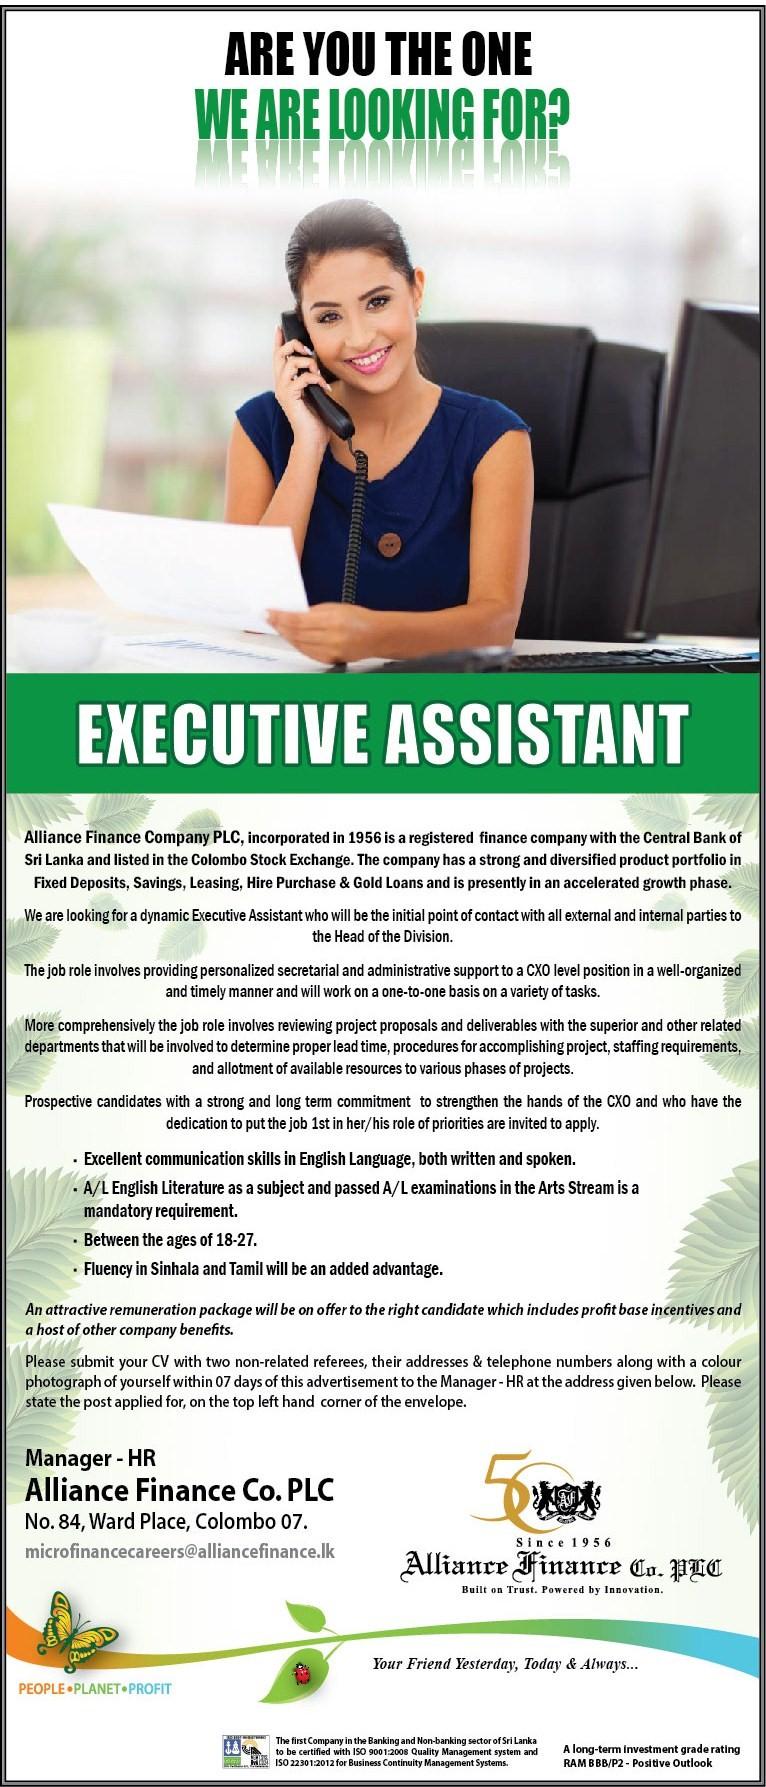 Executive Assistant Jobs Vacancies - Alliance Finance Jobs Vacancy Details